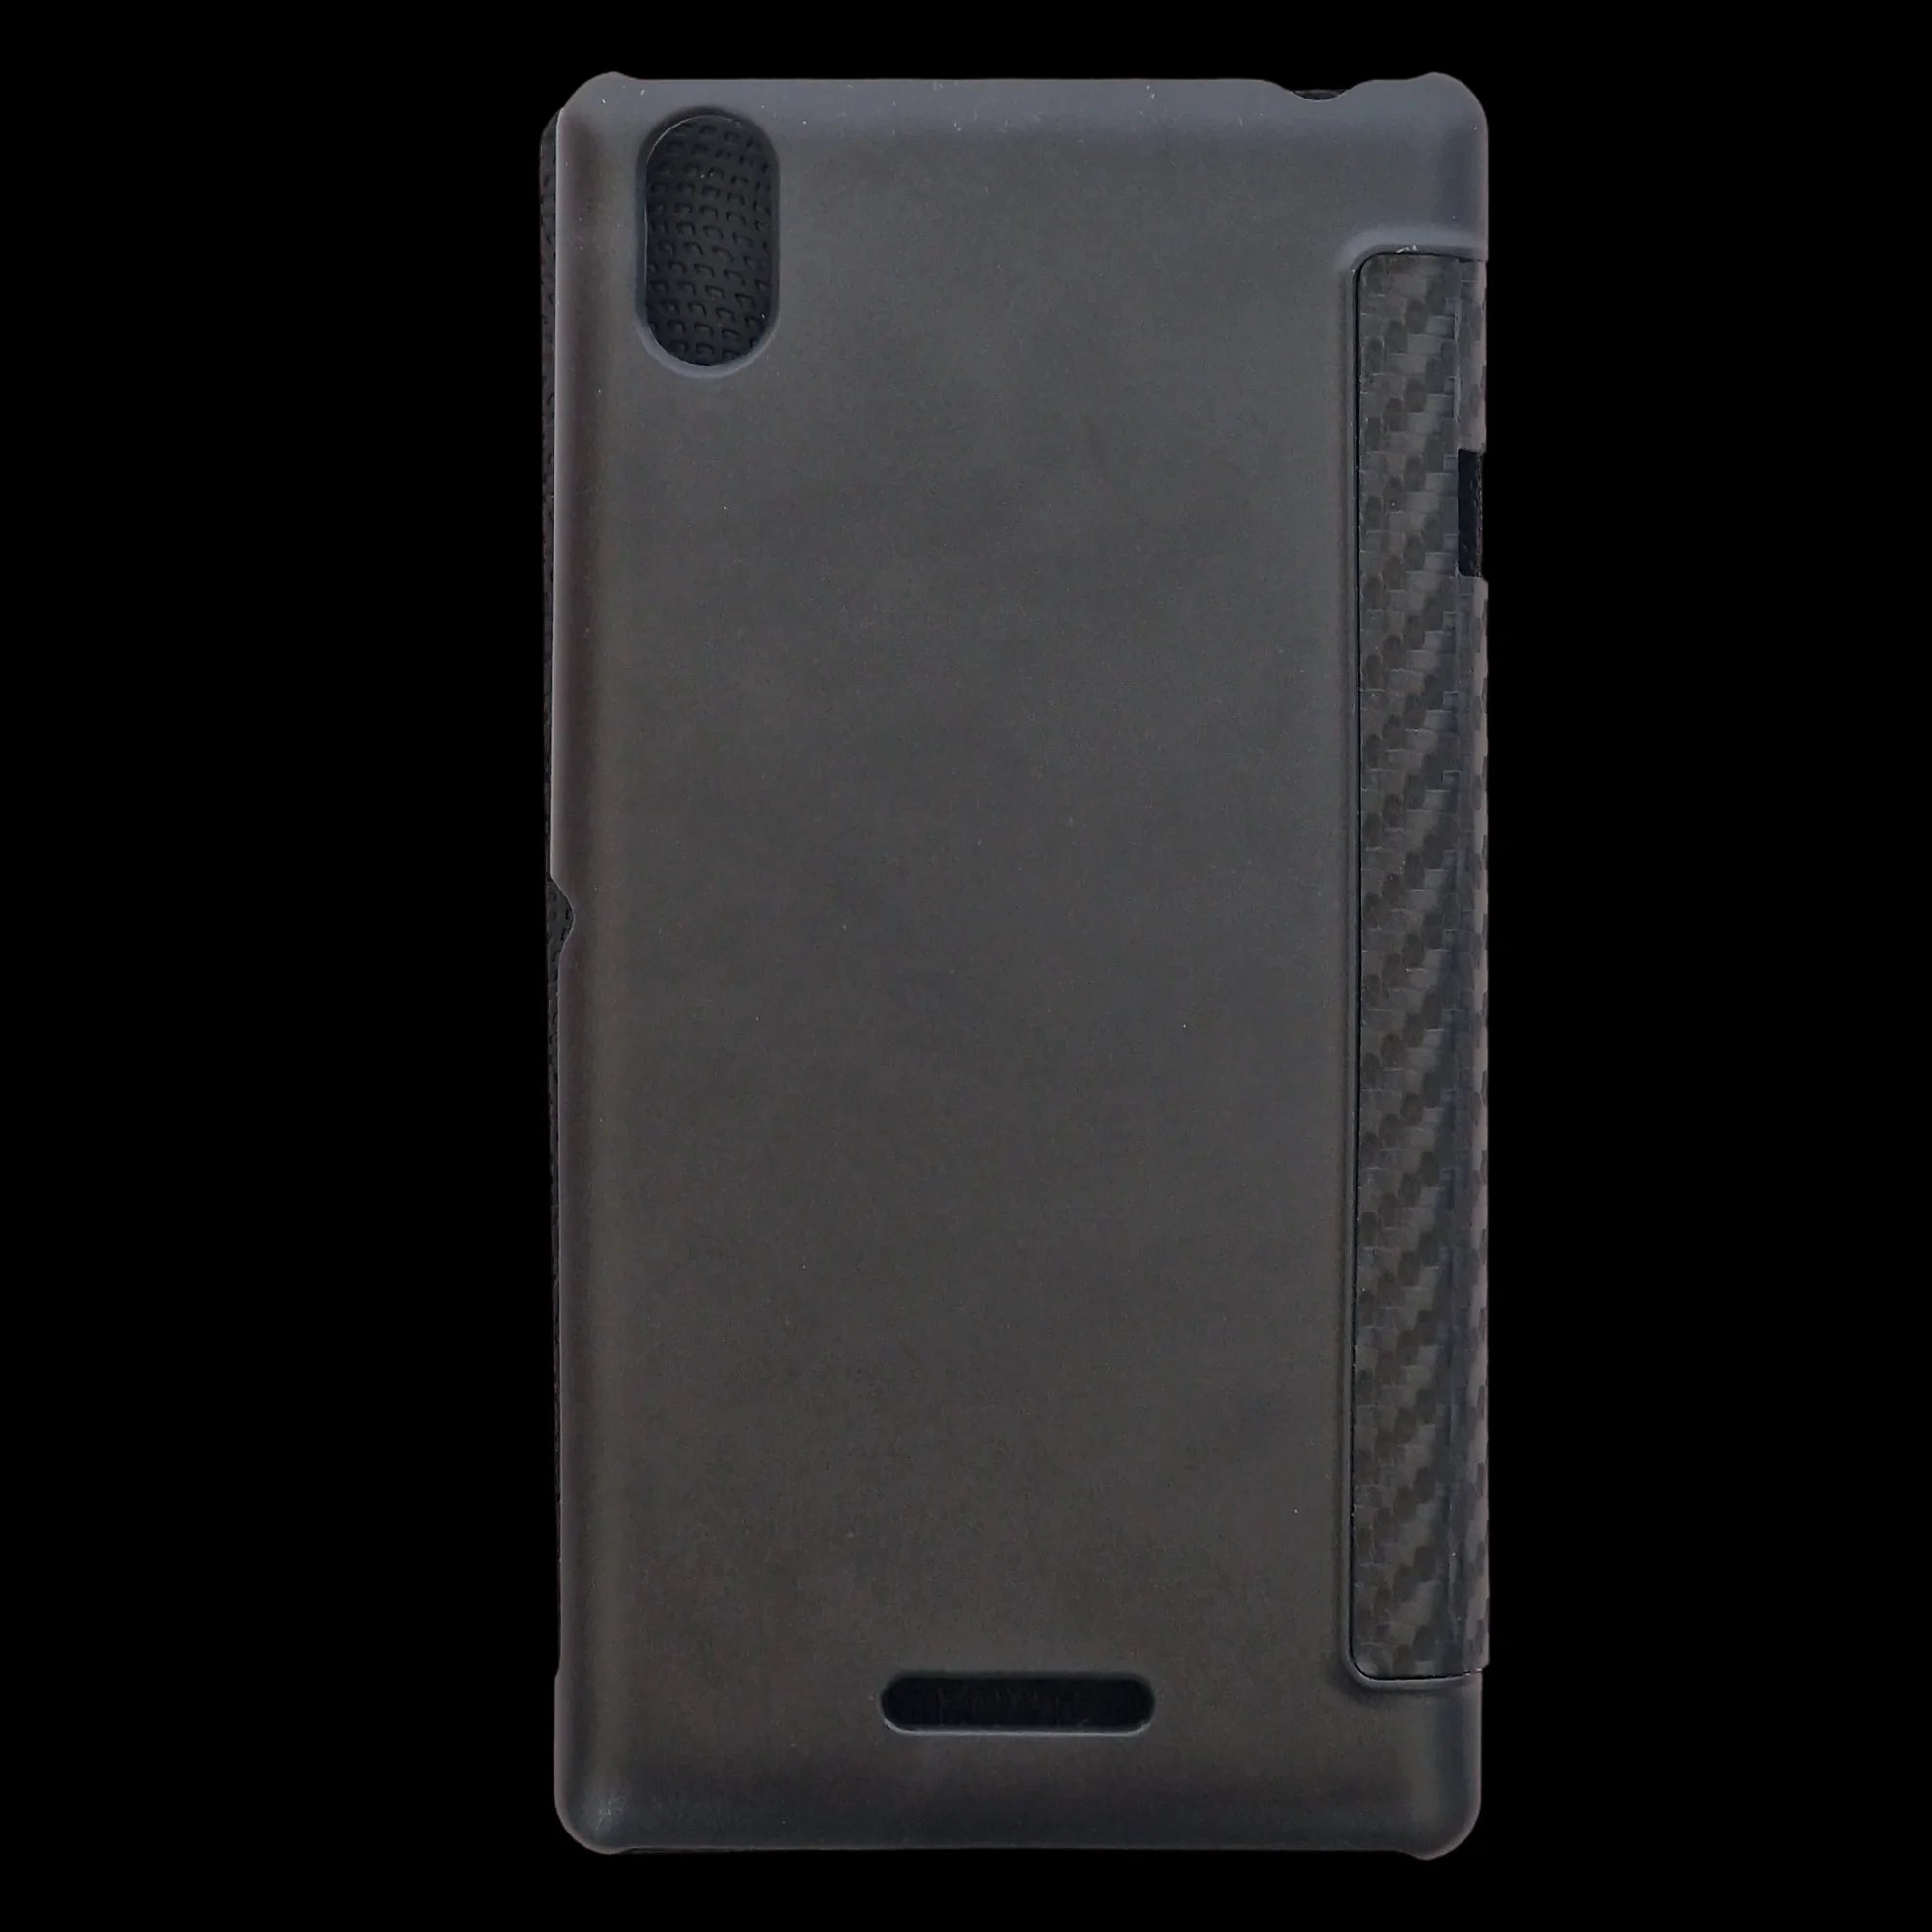 Sony Experia T3 Black Roxfit Mobile Phone Case - 4 - 3197